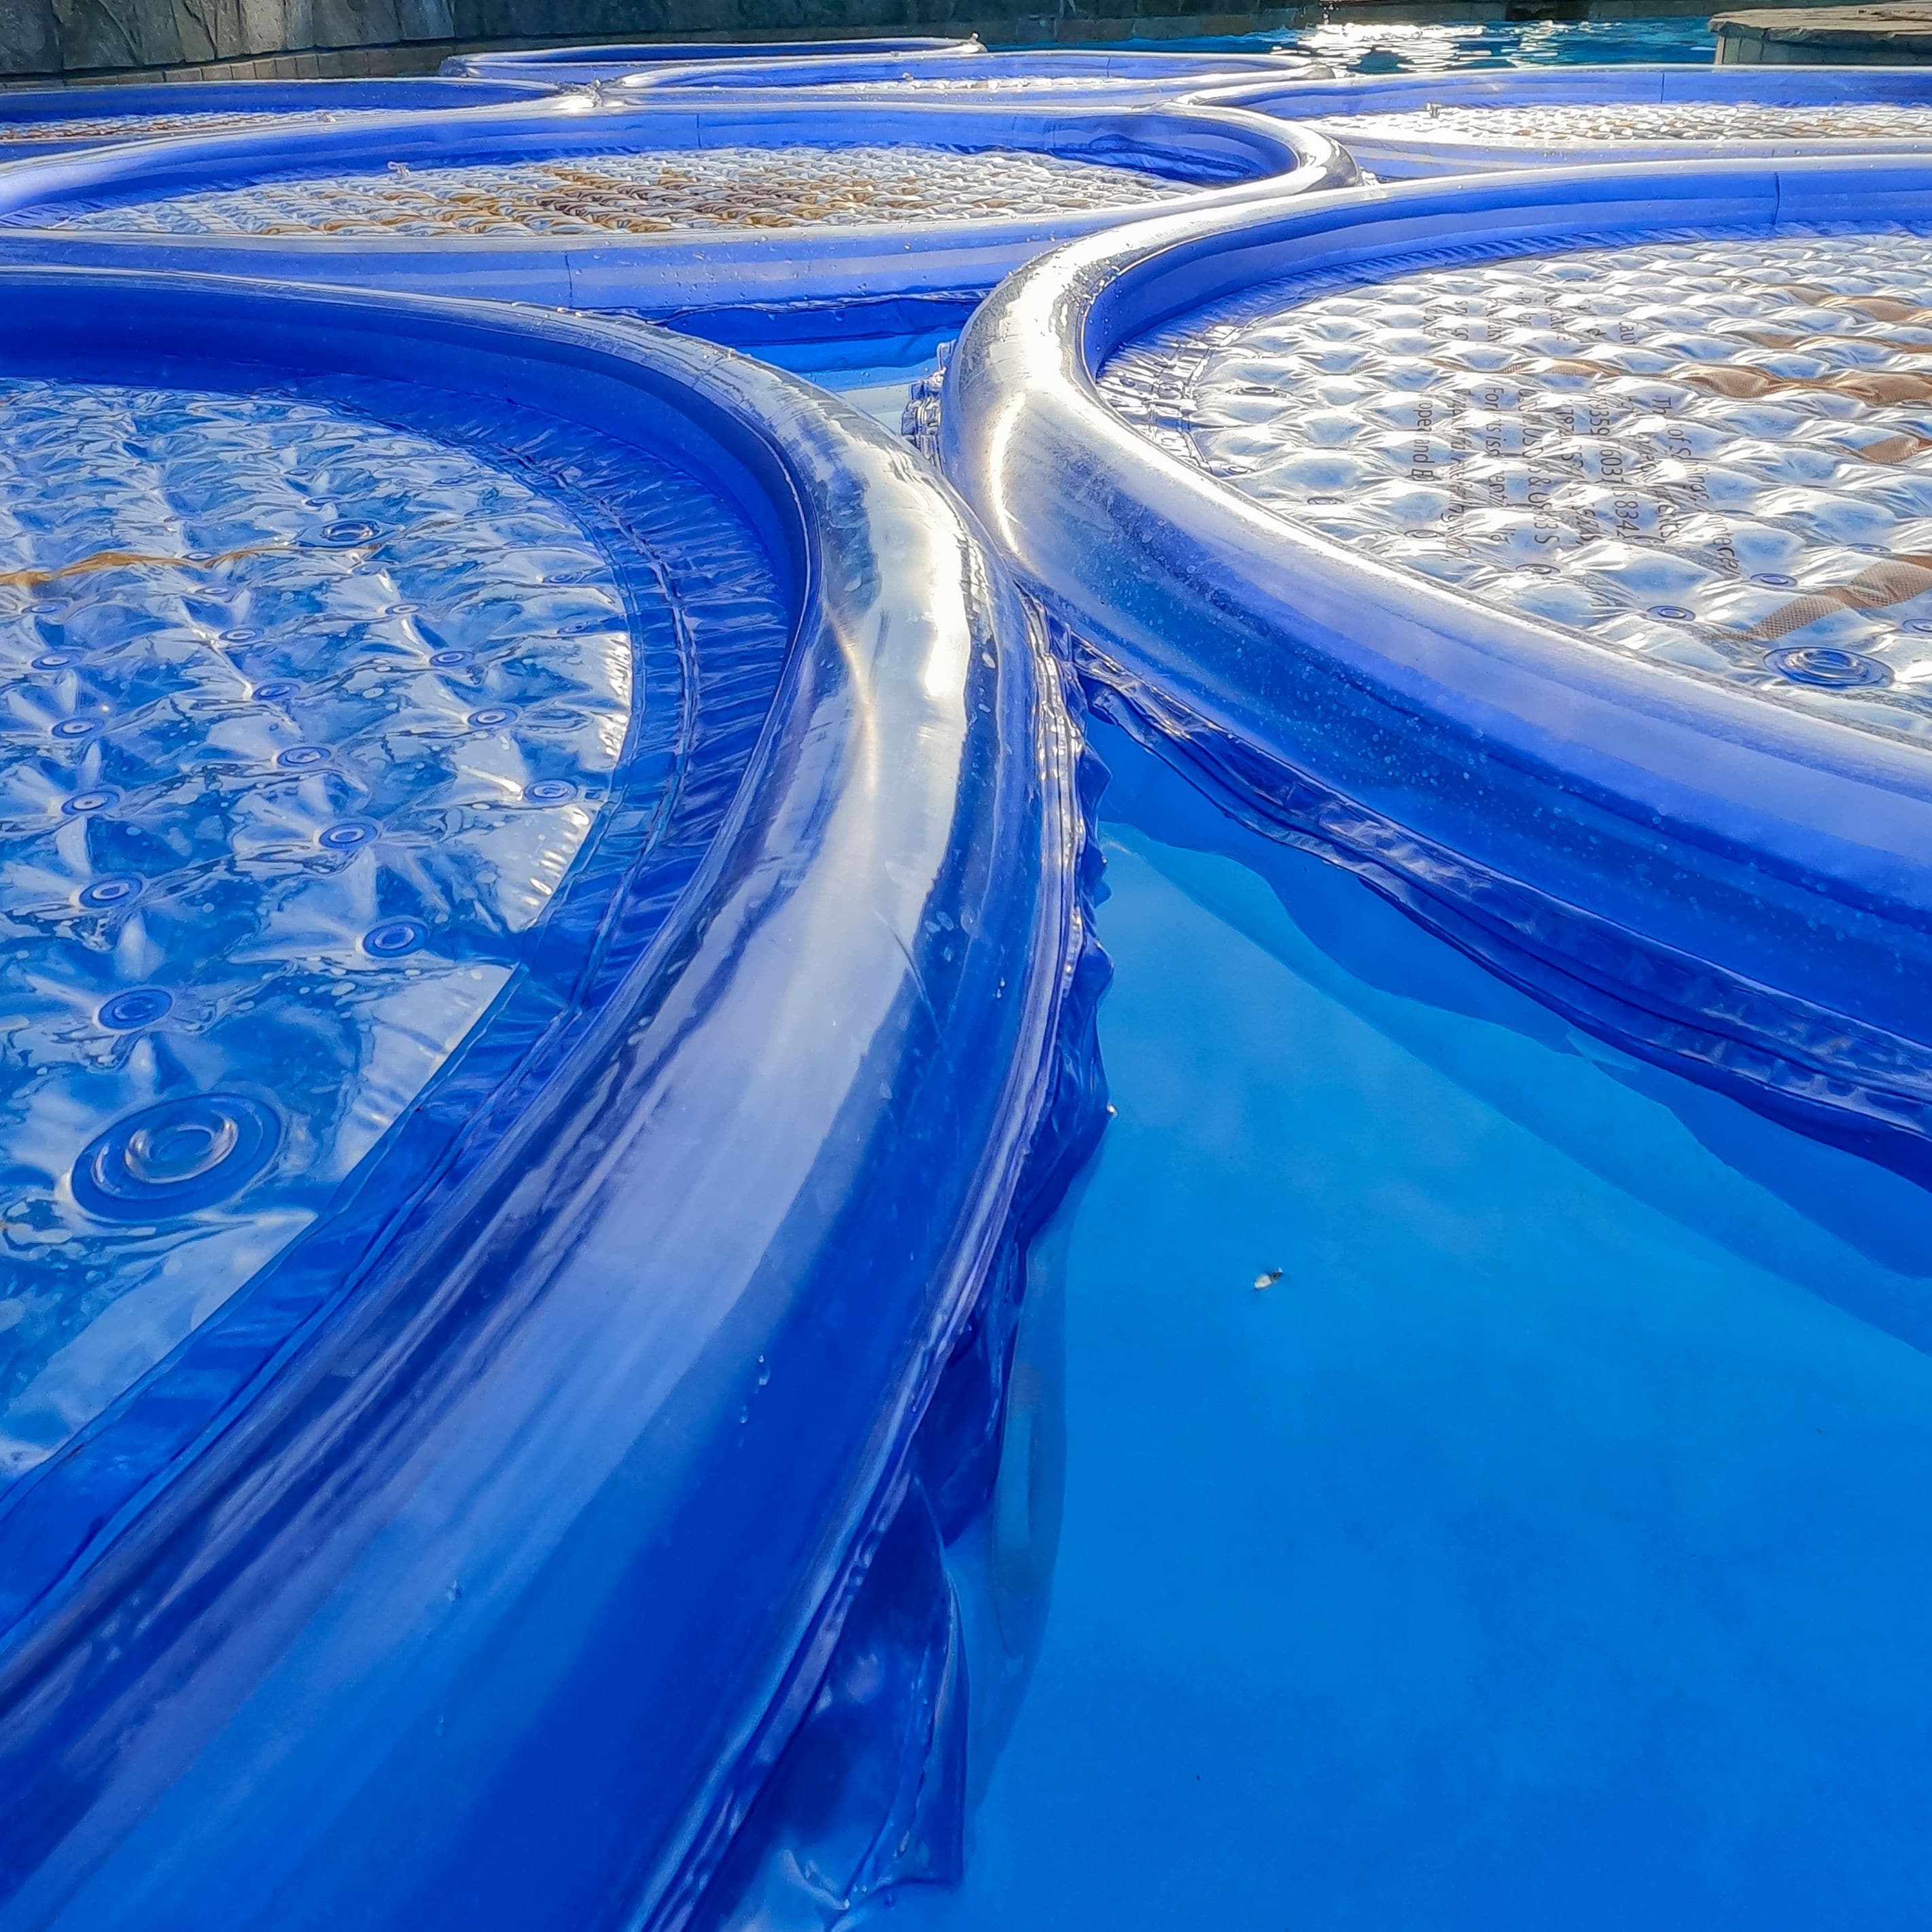 Solar Sun Rings UV Resistant Pool Spa Heater Circular Solar Cover, SSRA Sunburst